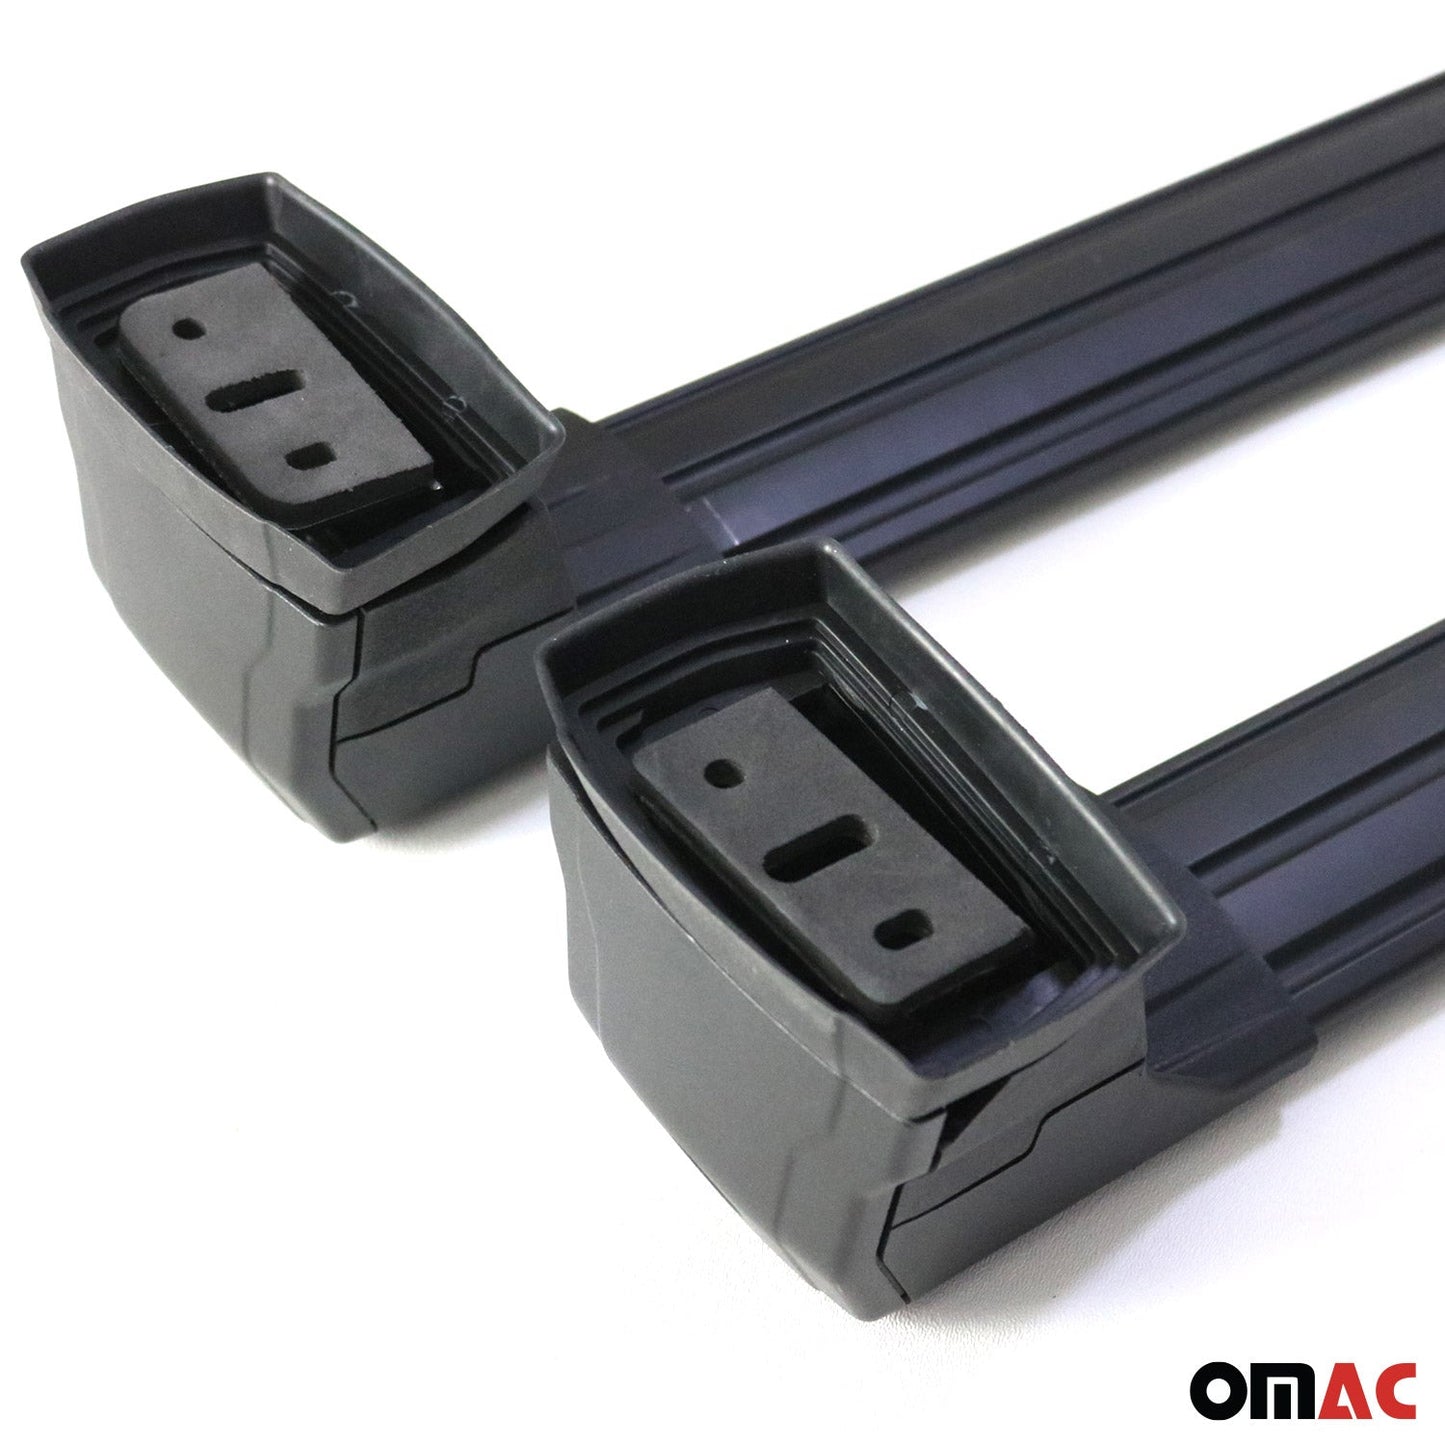 OMAC Fix Points Roof Racks Cross Bar Carrier for Mazda 6 2003-2008 Aluminium Black 2x 4614913B